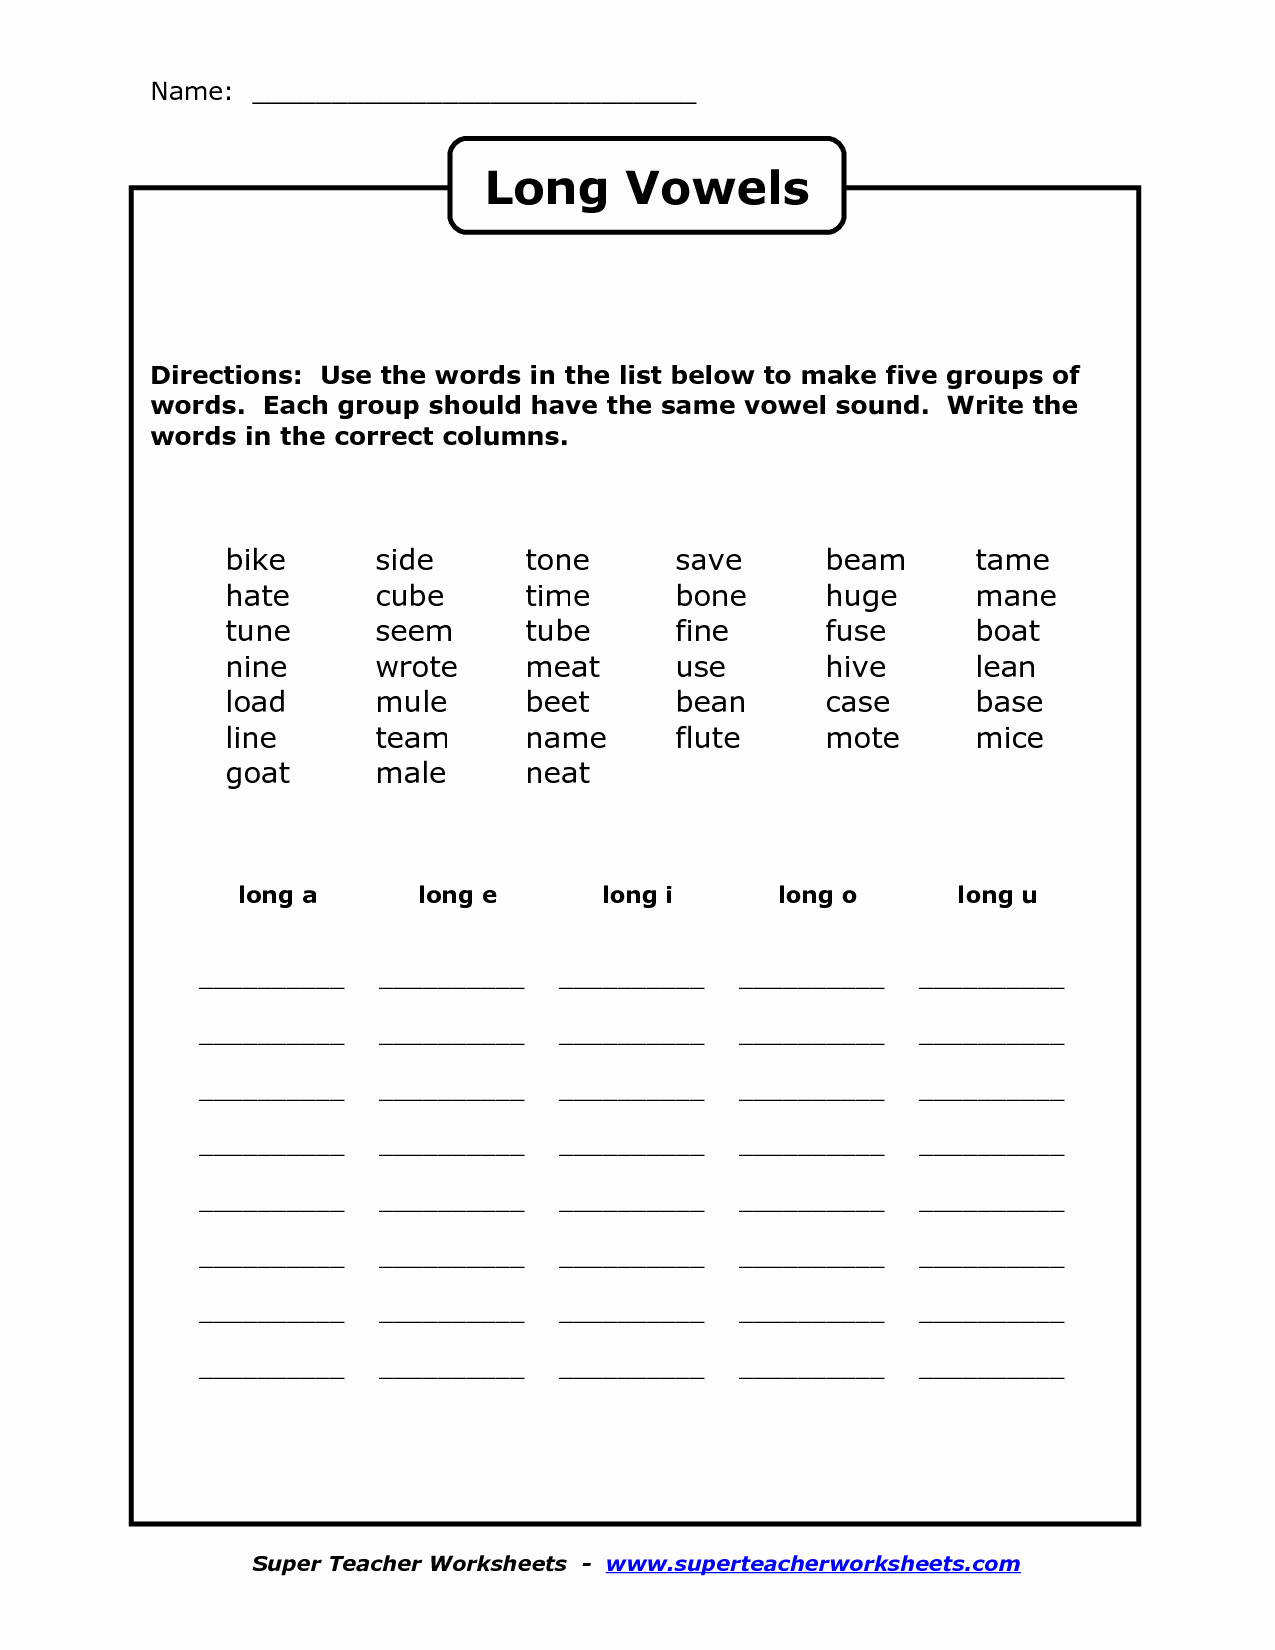 Short and Long Vowels Worksheet Lovely 18 Best Of Long A Worksheets Long Vowel sounds